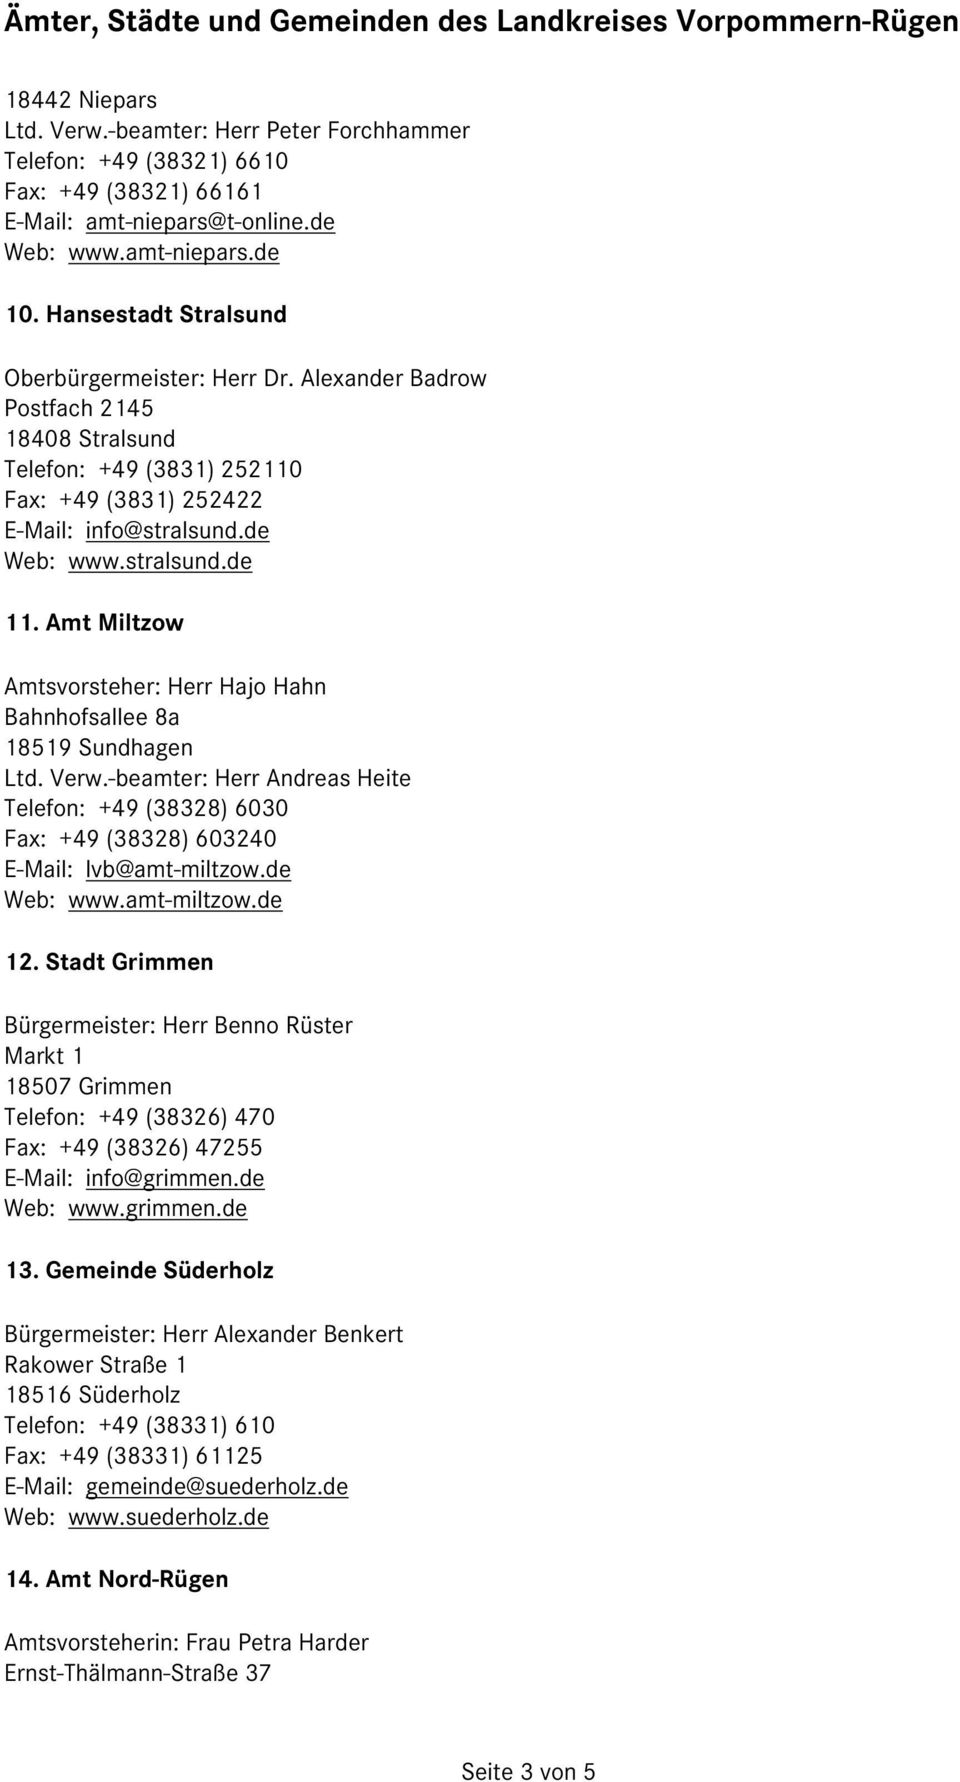 Amt Miltzow Amtsvorsteher: Herr Hajo Hahn Bahnhofsallee 8a 18519 Sundhagen Ltd. Verw.-beamter: Herr Andreas Heite Telefon: +49 (38328) 6030 Fax: +49 (38328) 603240 E-Mail: lvb@amt-miltzow.de Web: www.